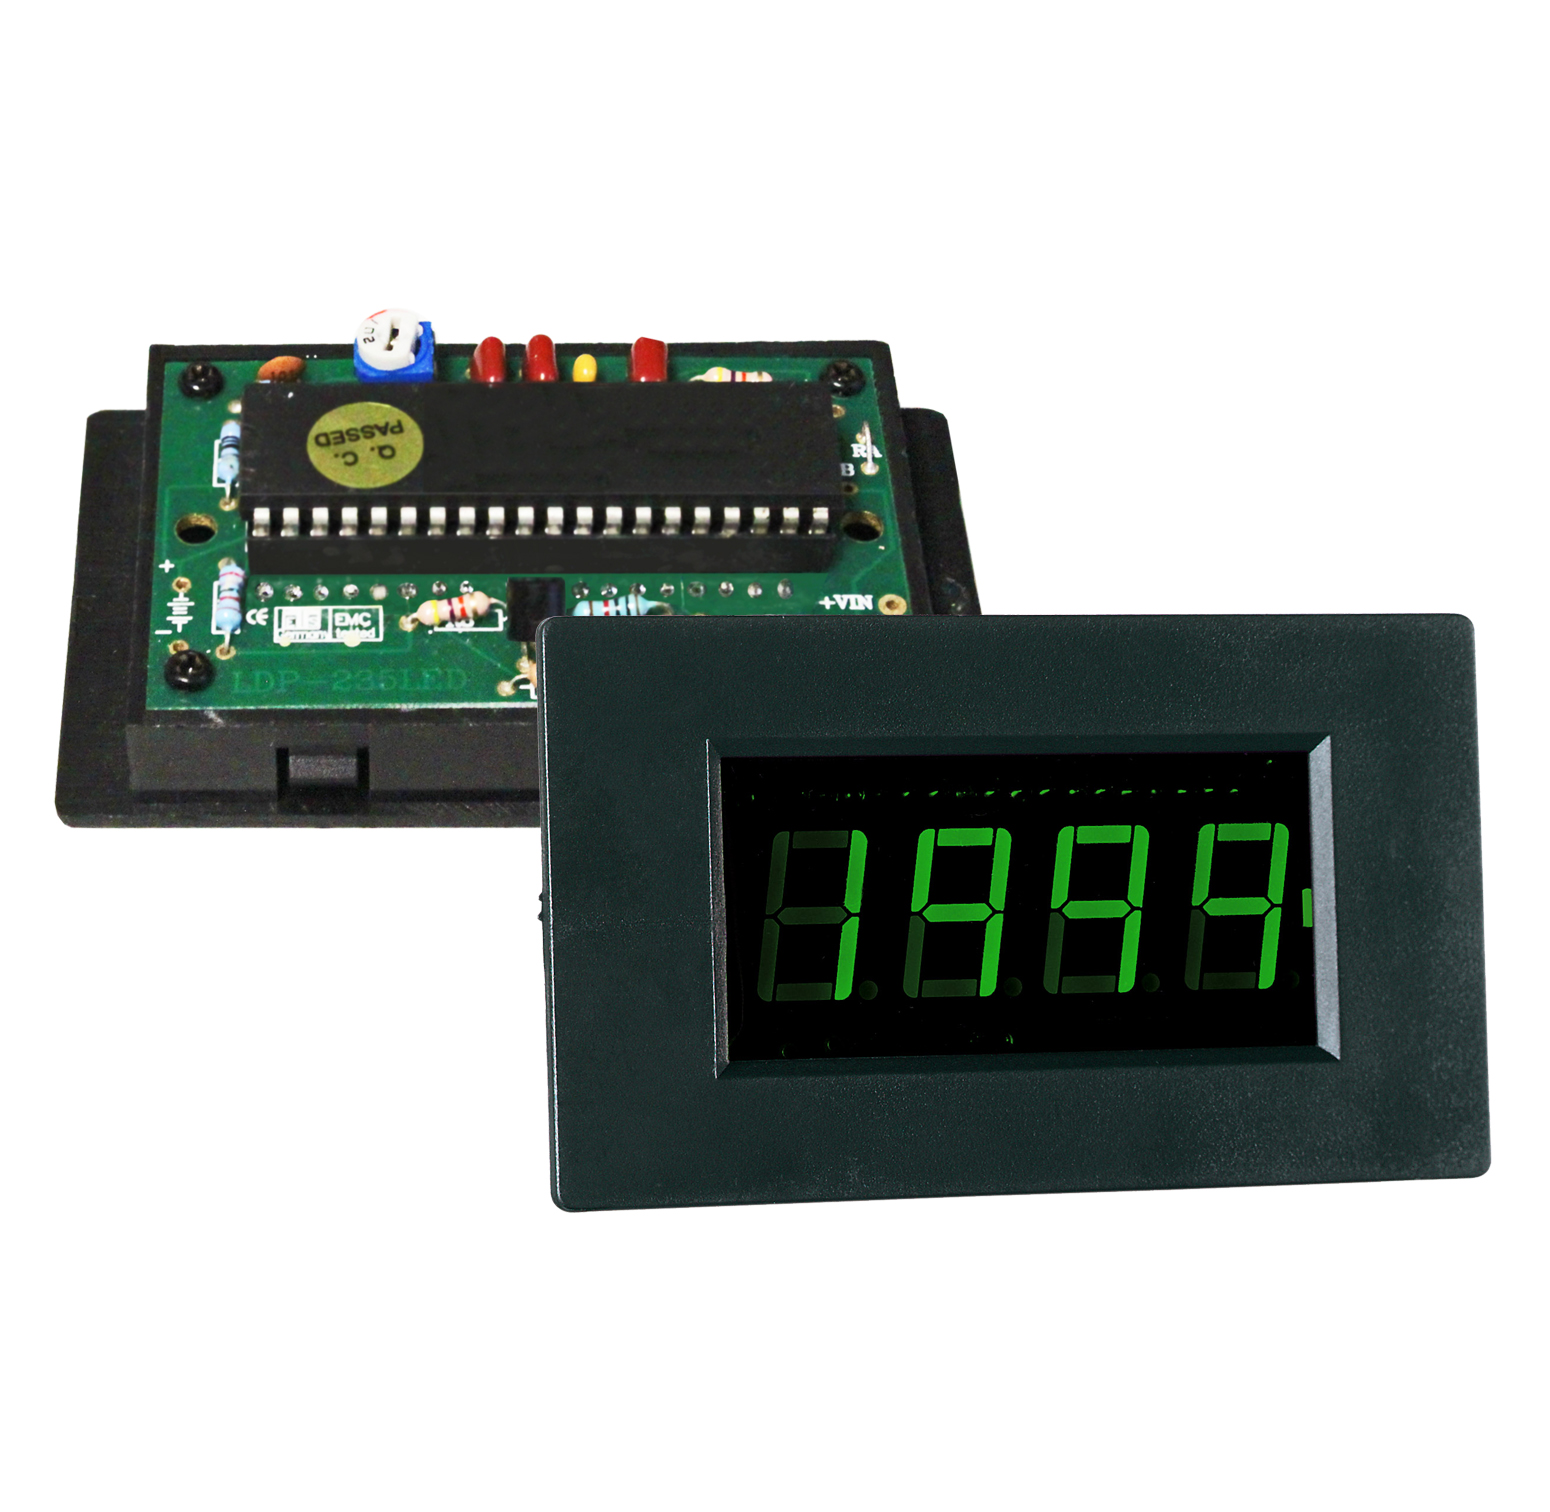 «PeakTech® LDP-240» Volt & ammeter, LCD display 14mm hight of digits